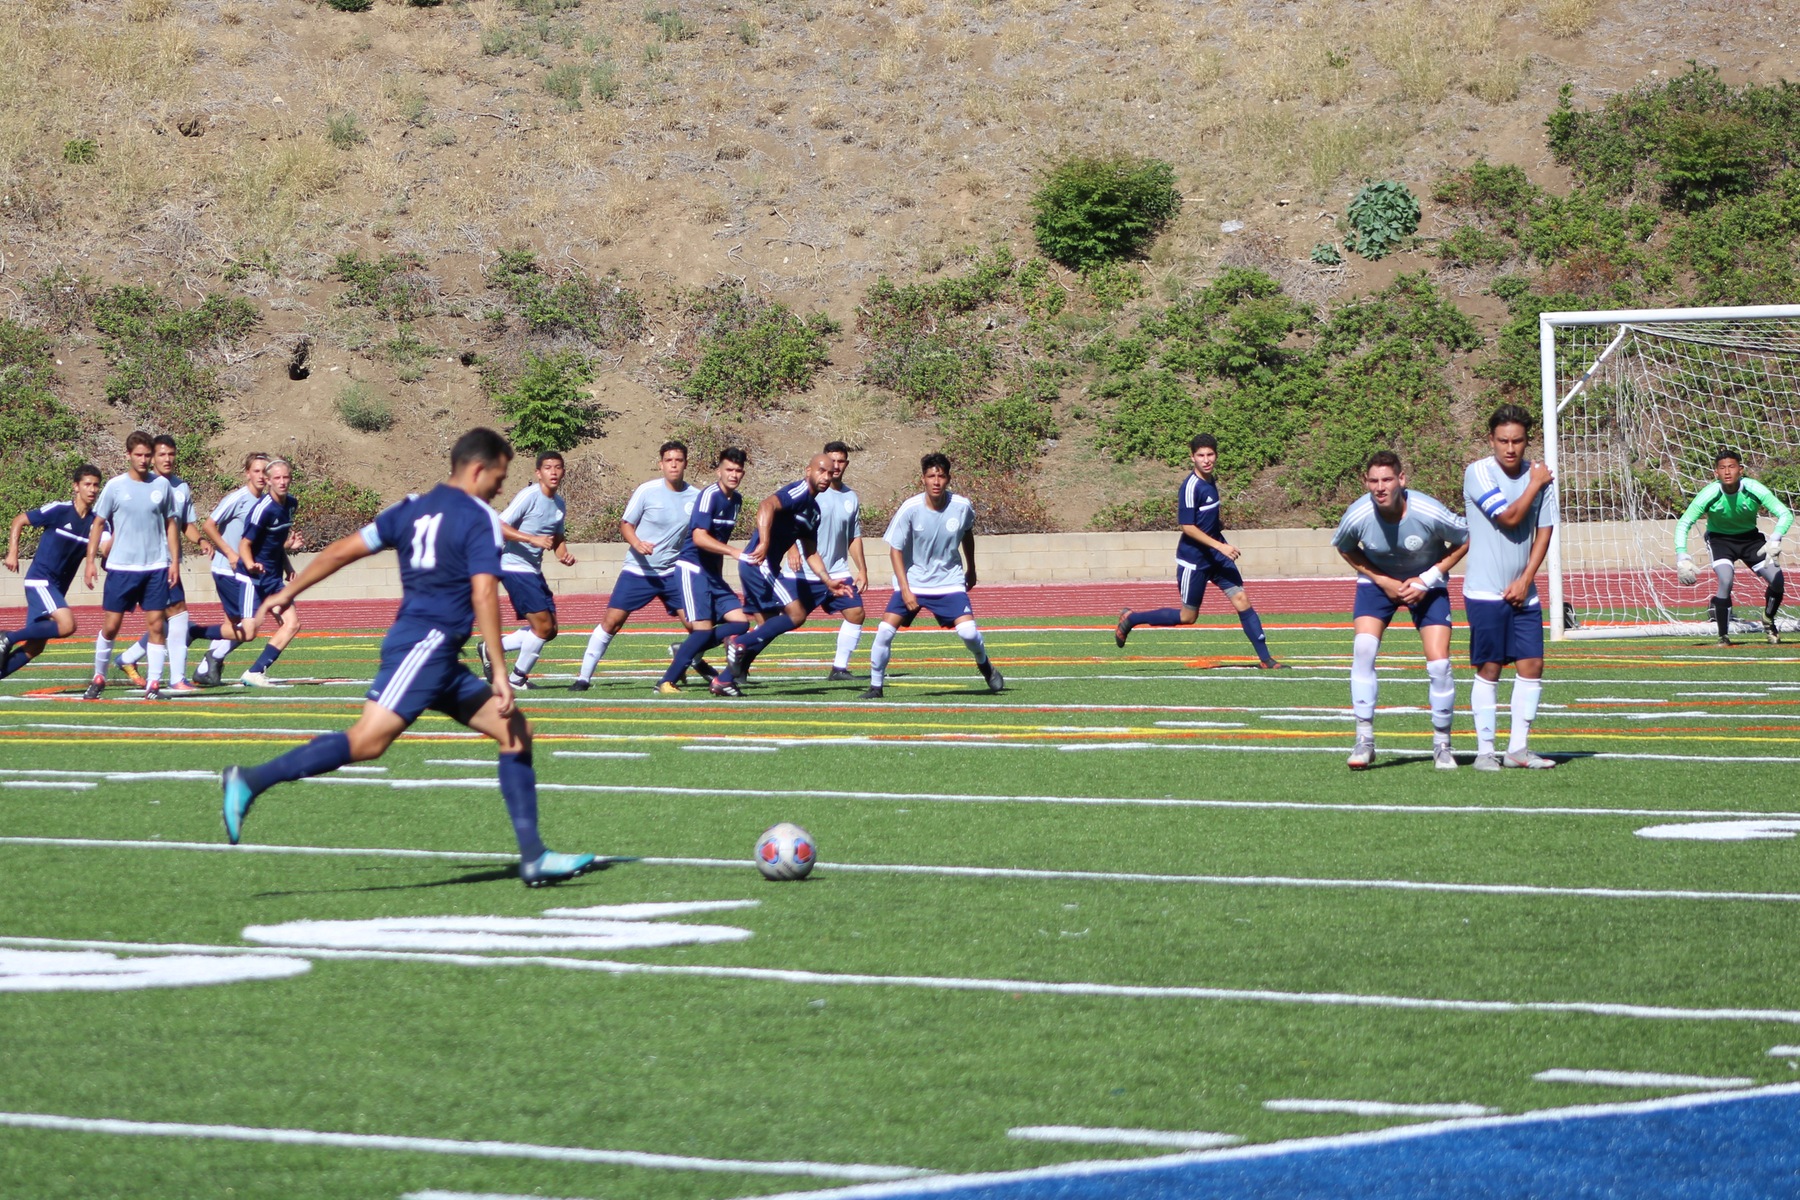 Edgar Guadalupe-Garcia takes a free kick as his teammates prepare. Image: Molly Montell